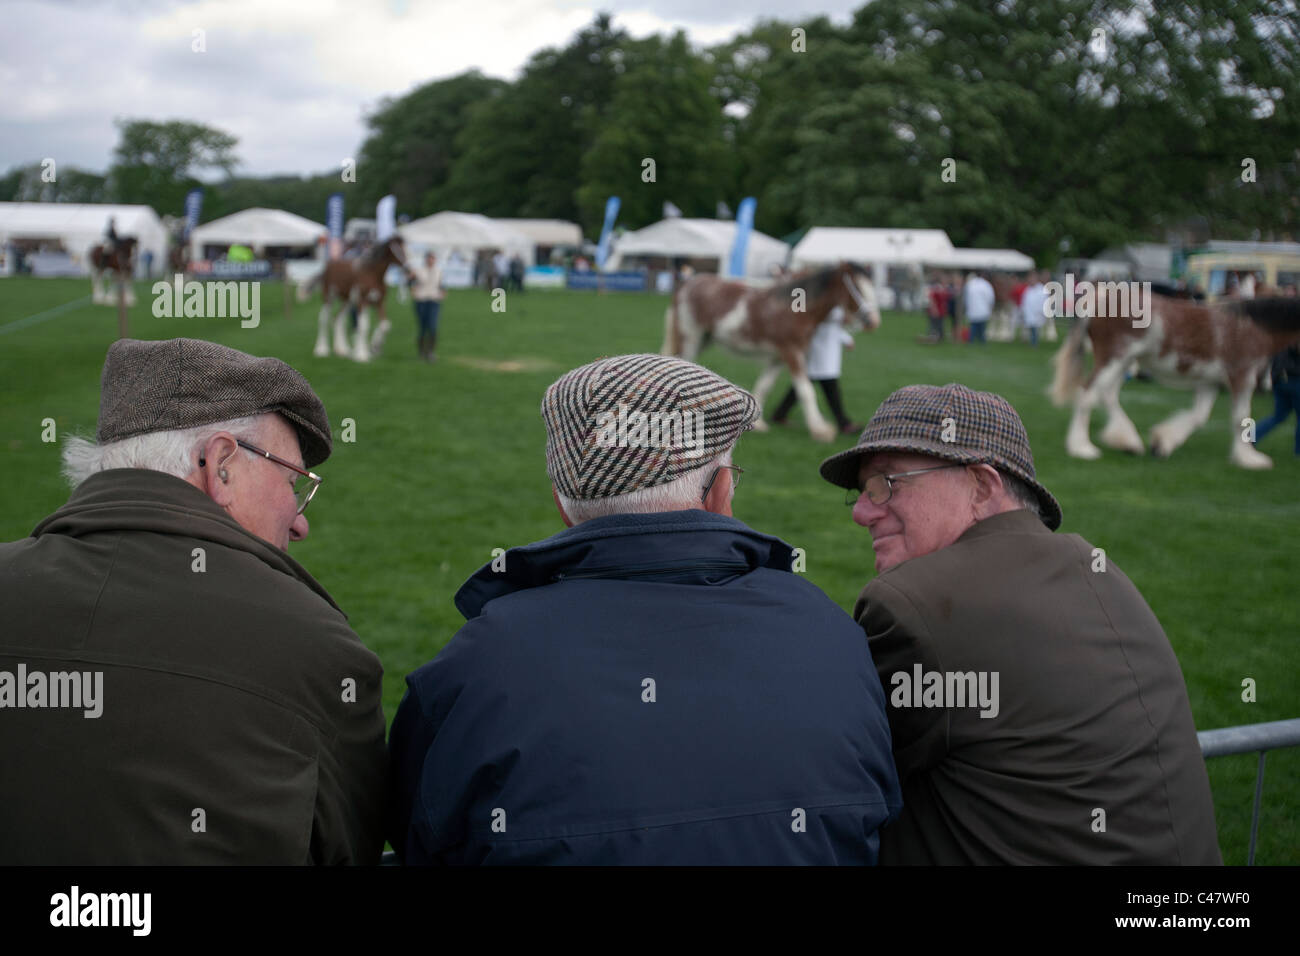 three men watch a horse show in fife scotland Stock Photo